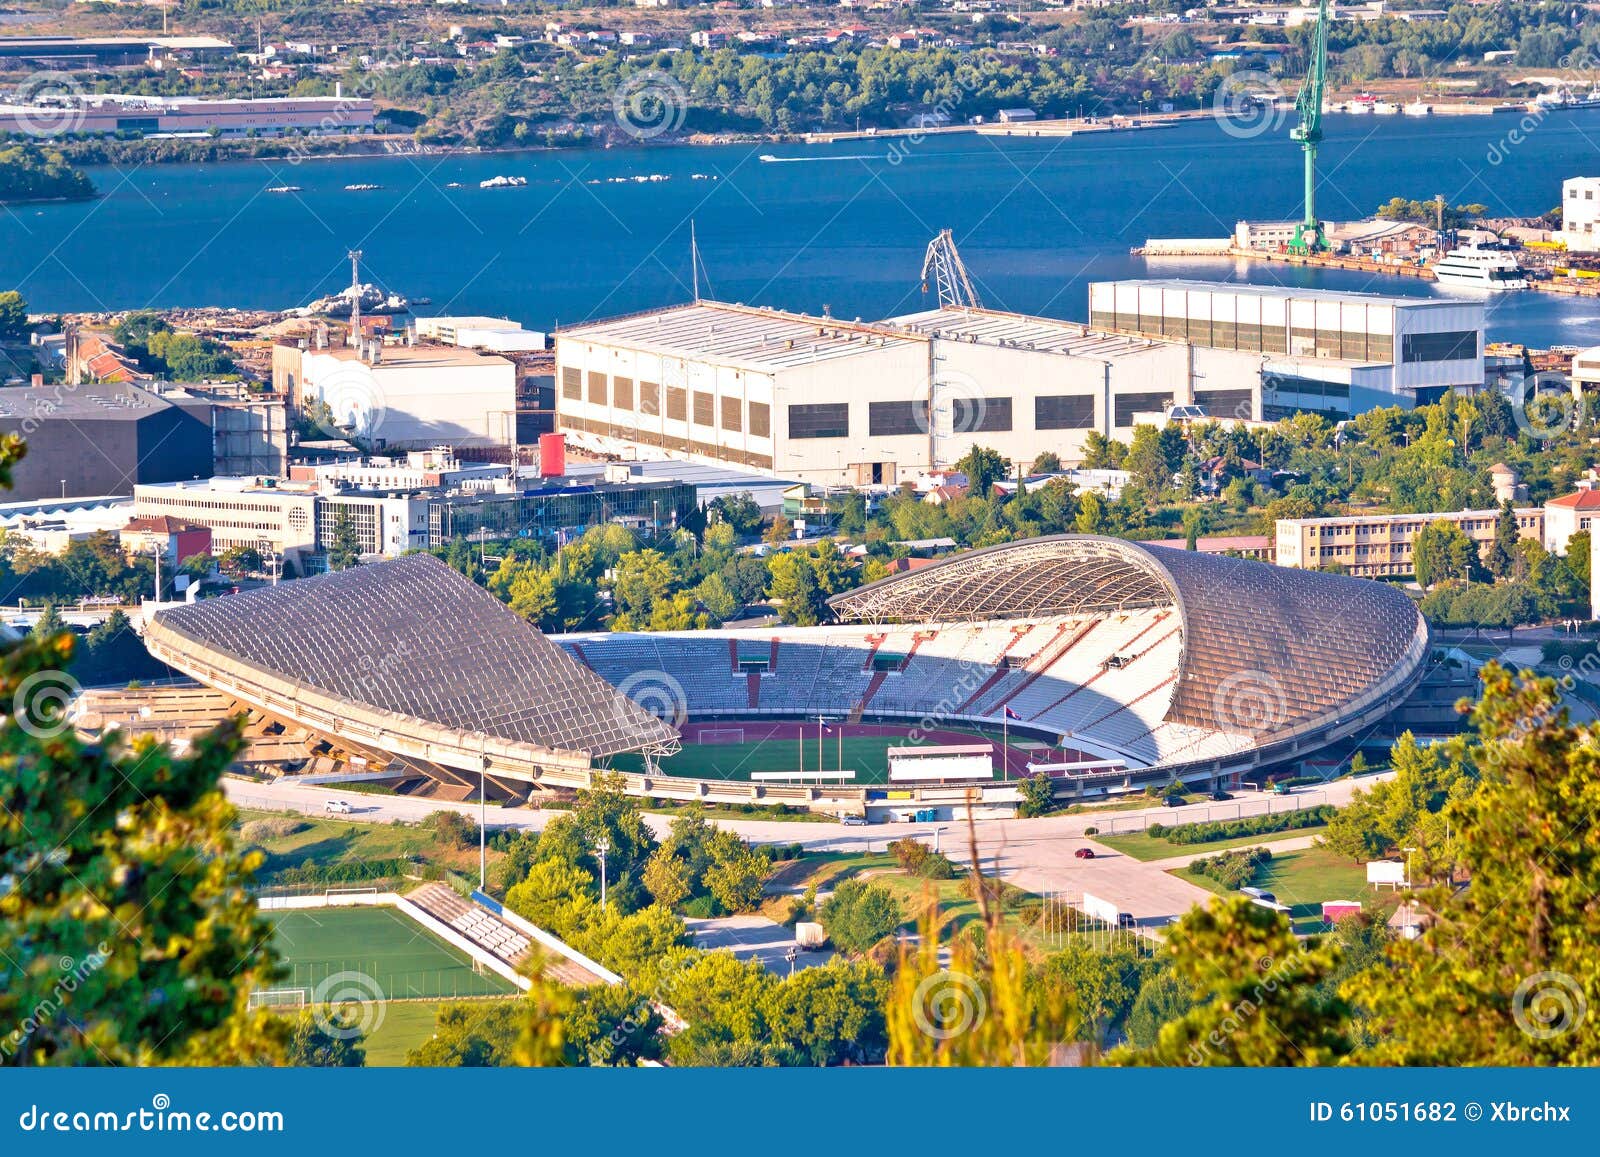 Poljud, home to Hajduk Split - Football Ground Map